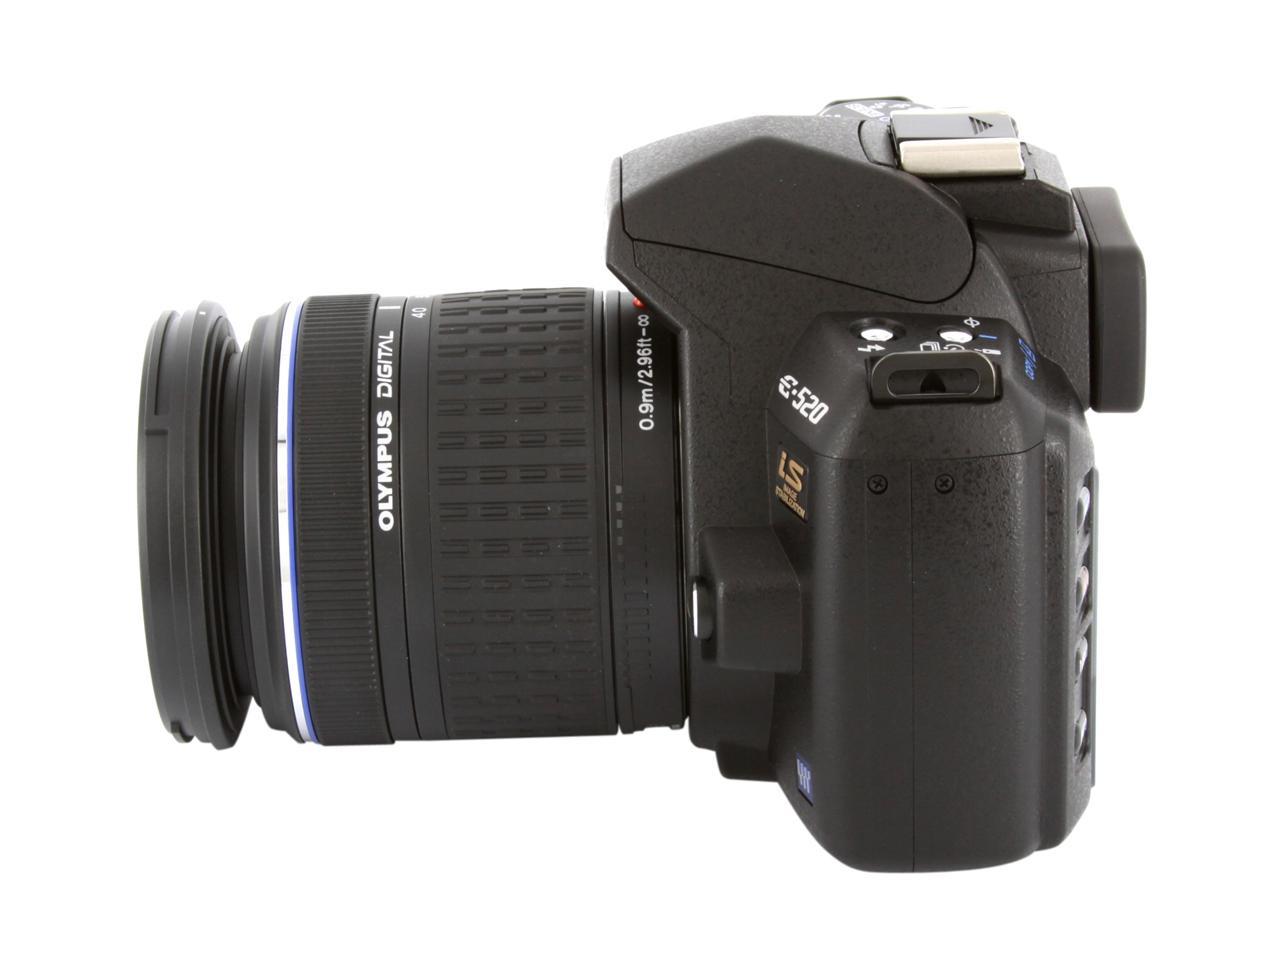 OLYMPUS E-520 Black 10.0 MP 2.7" 230K LCD Digital SLR Camera w/ ZUIKO DIGITAL 14-42mm f/3.5-5.6 and 40-150mm f/4-5.6 Dual Lens